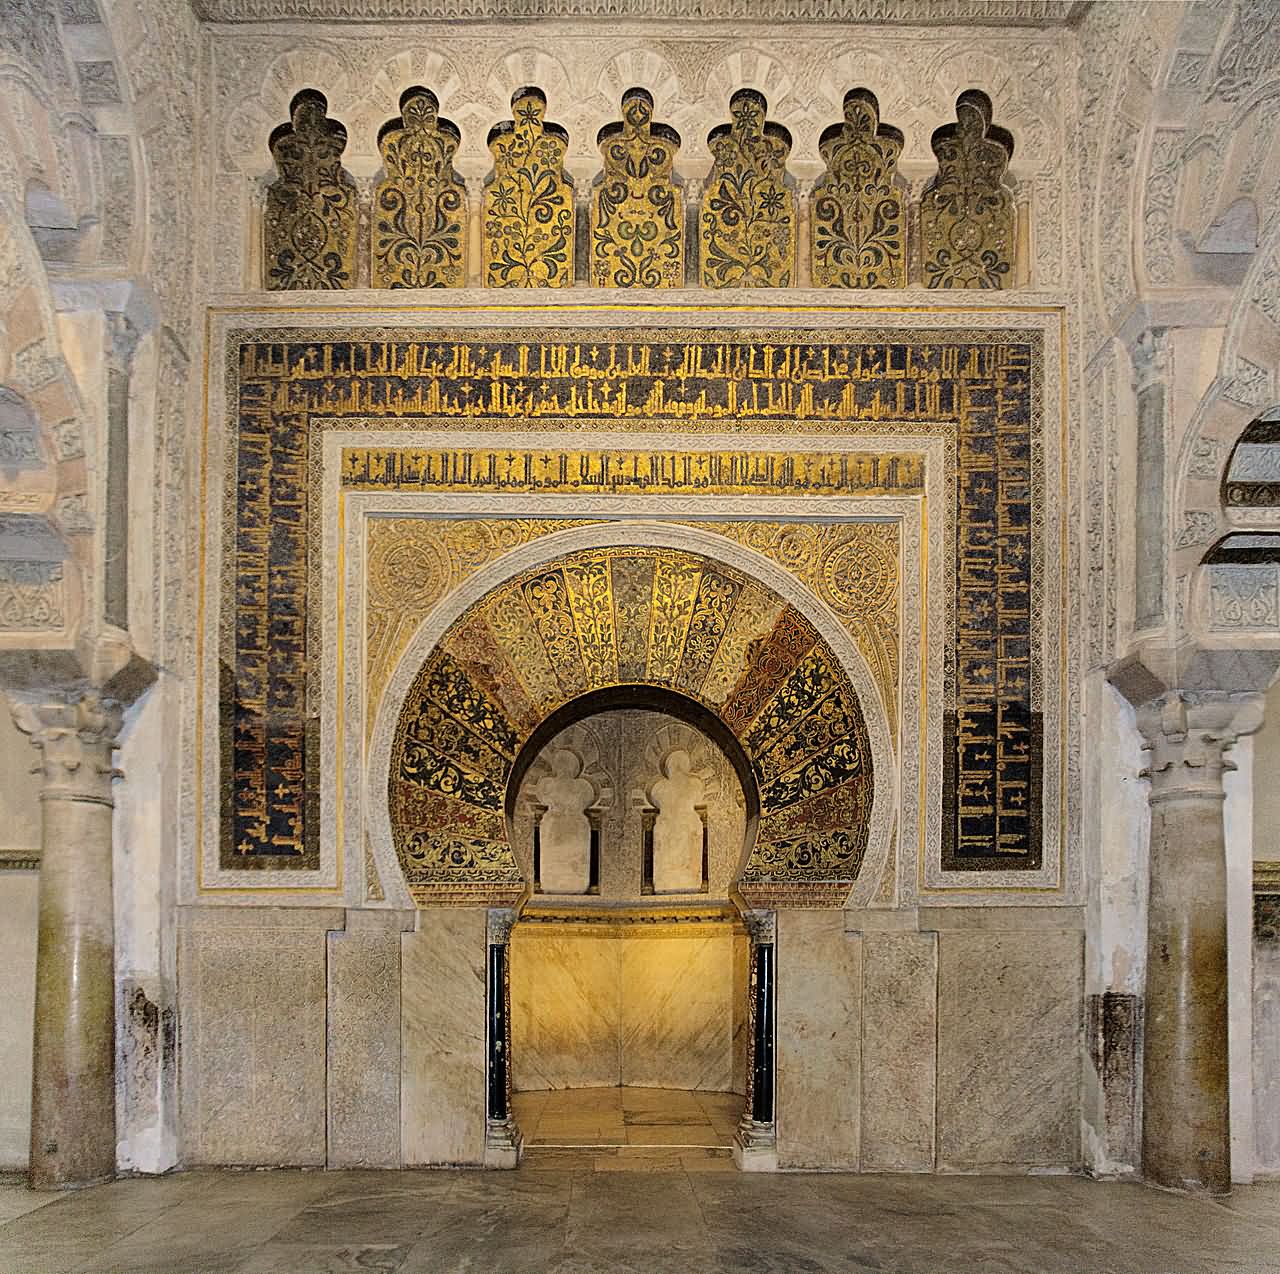 Islamic Artwork Inside The Mosque Of Cordoba